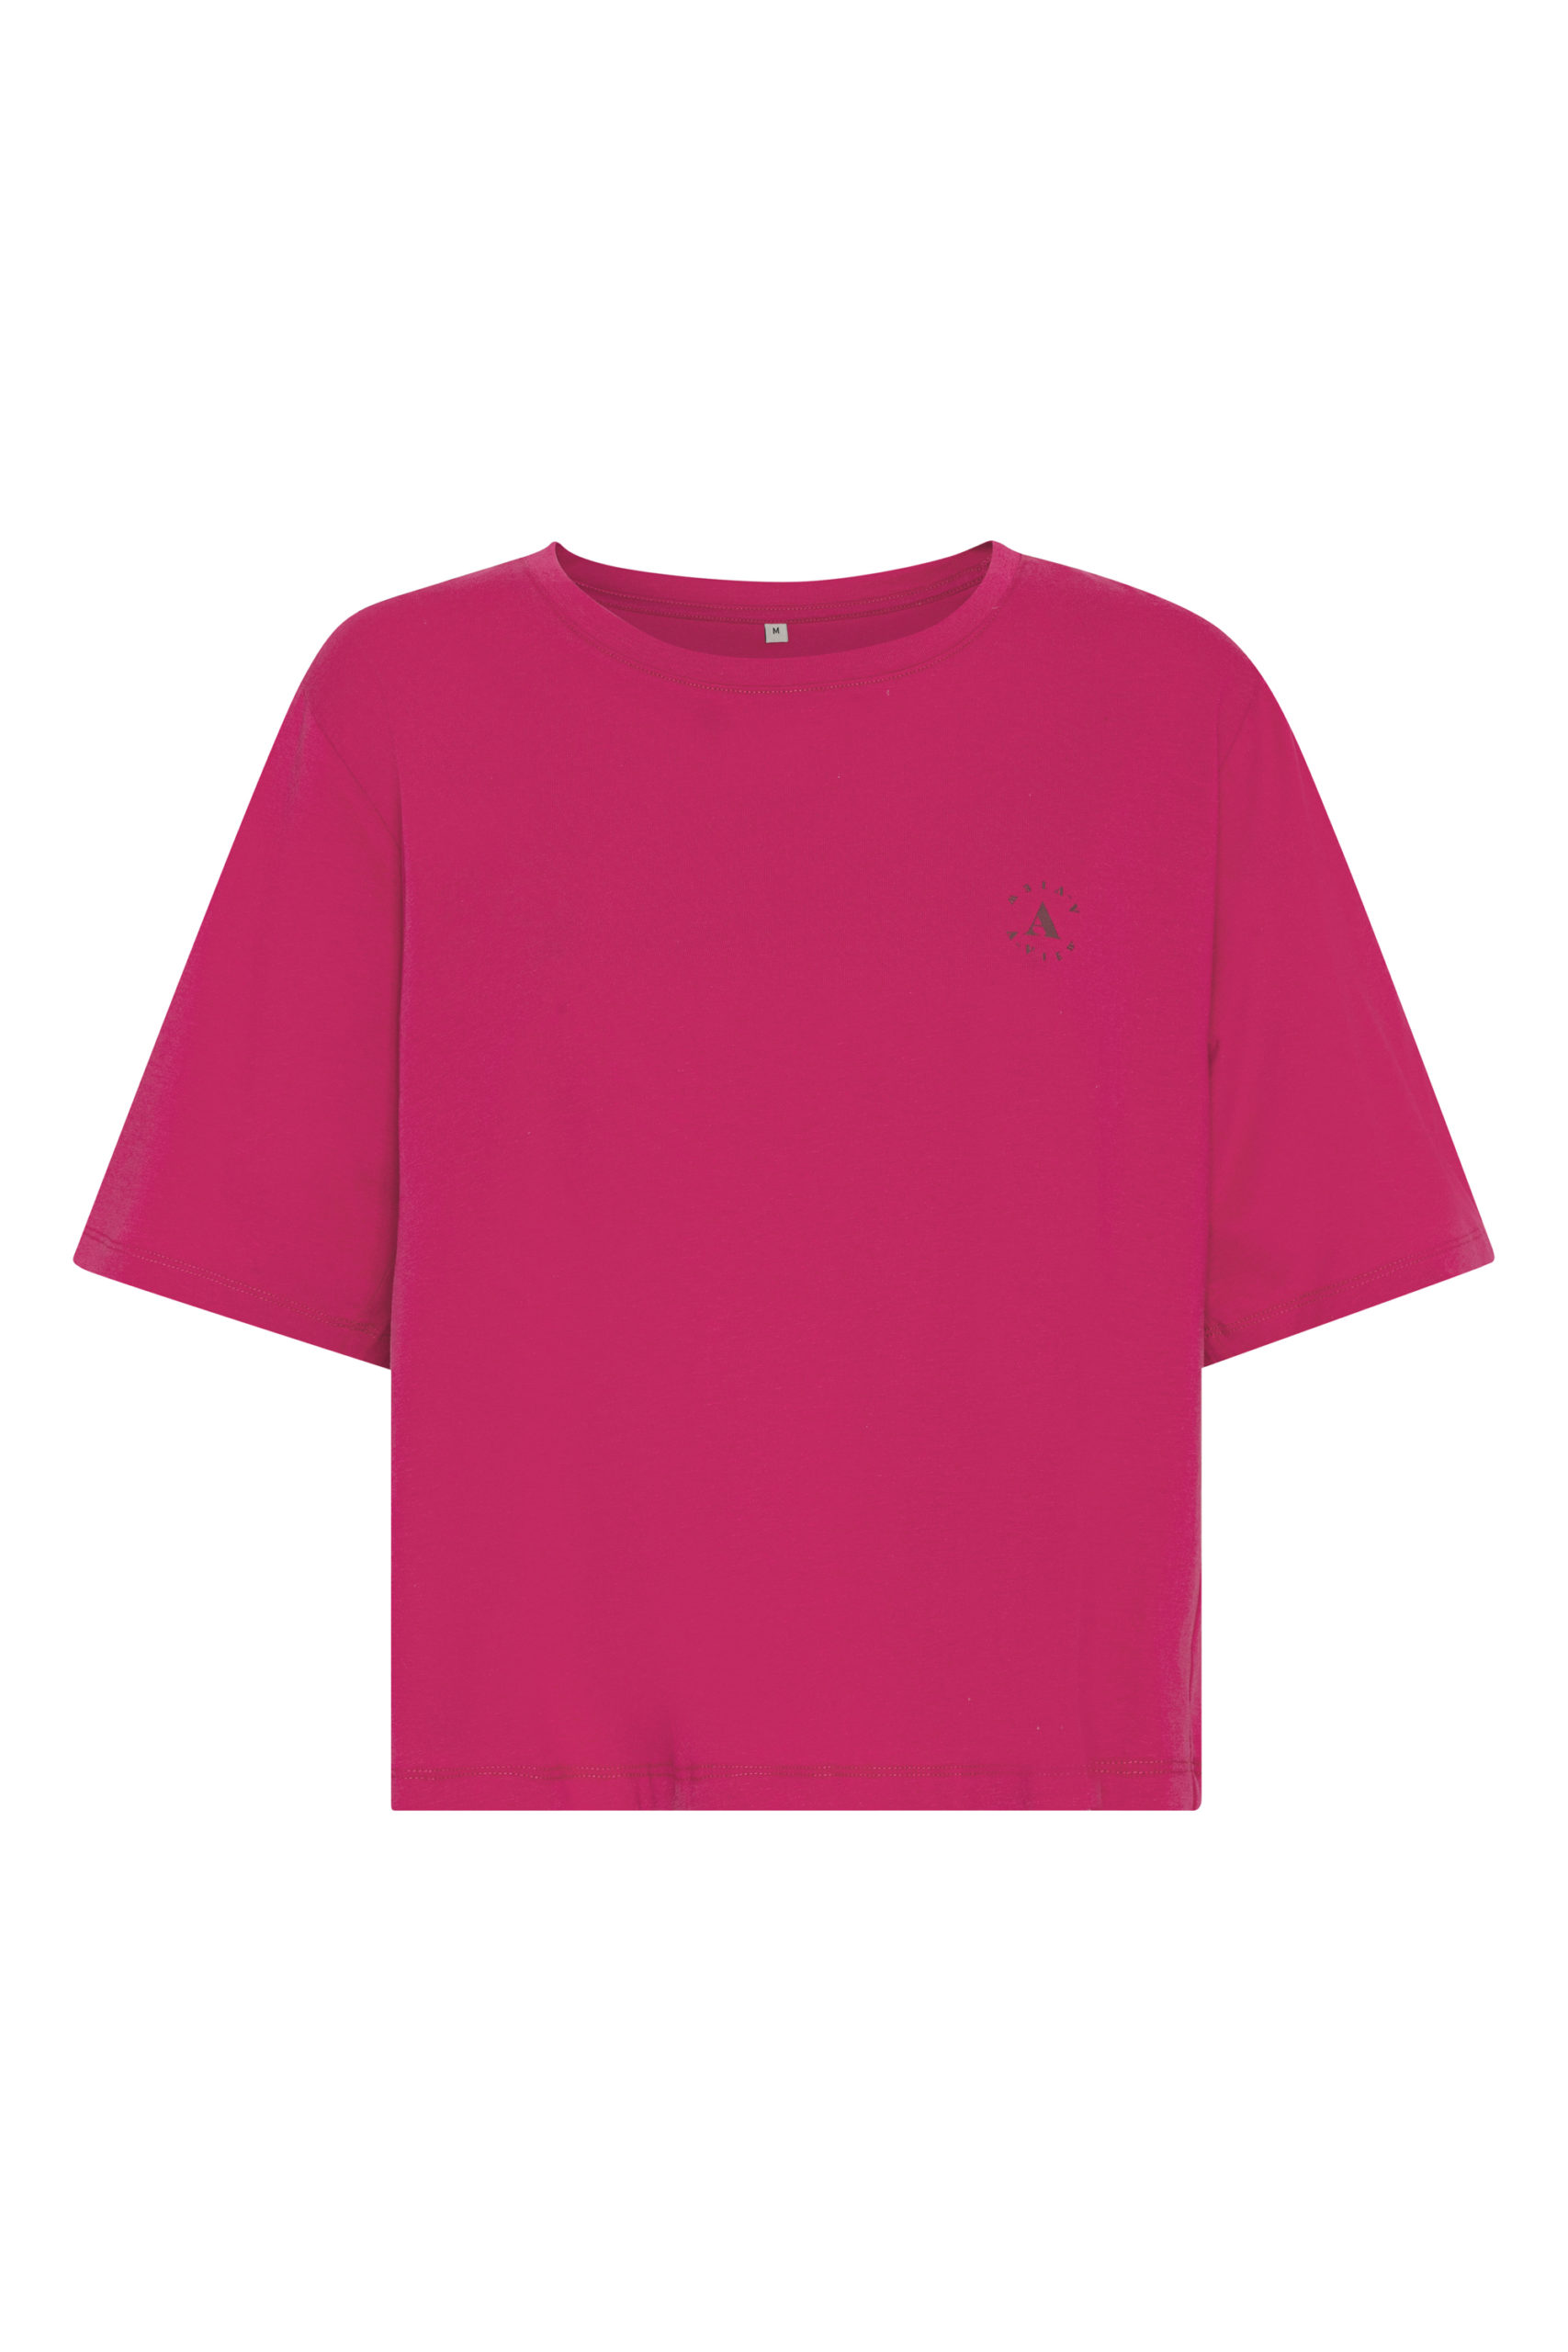 Sila T-Shirt pink